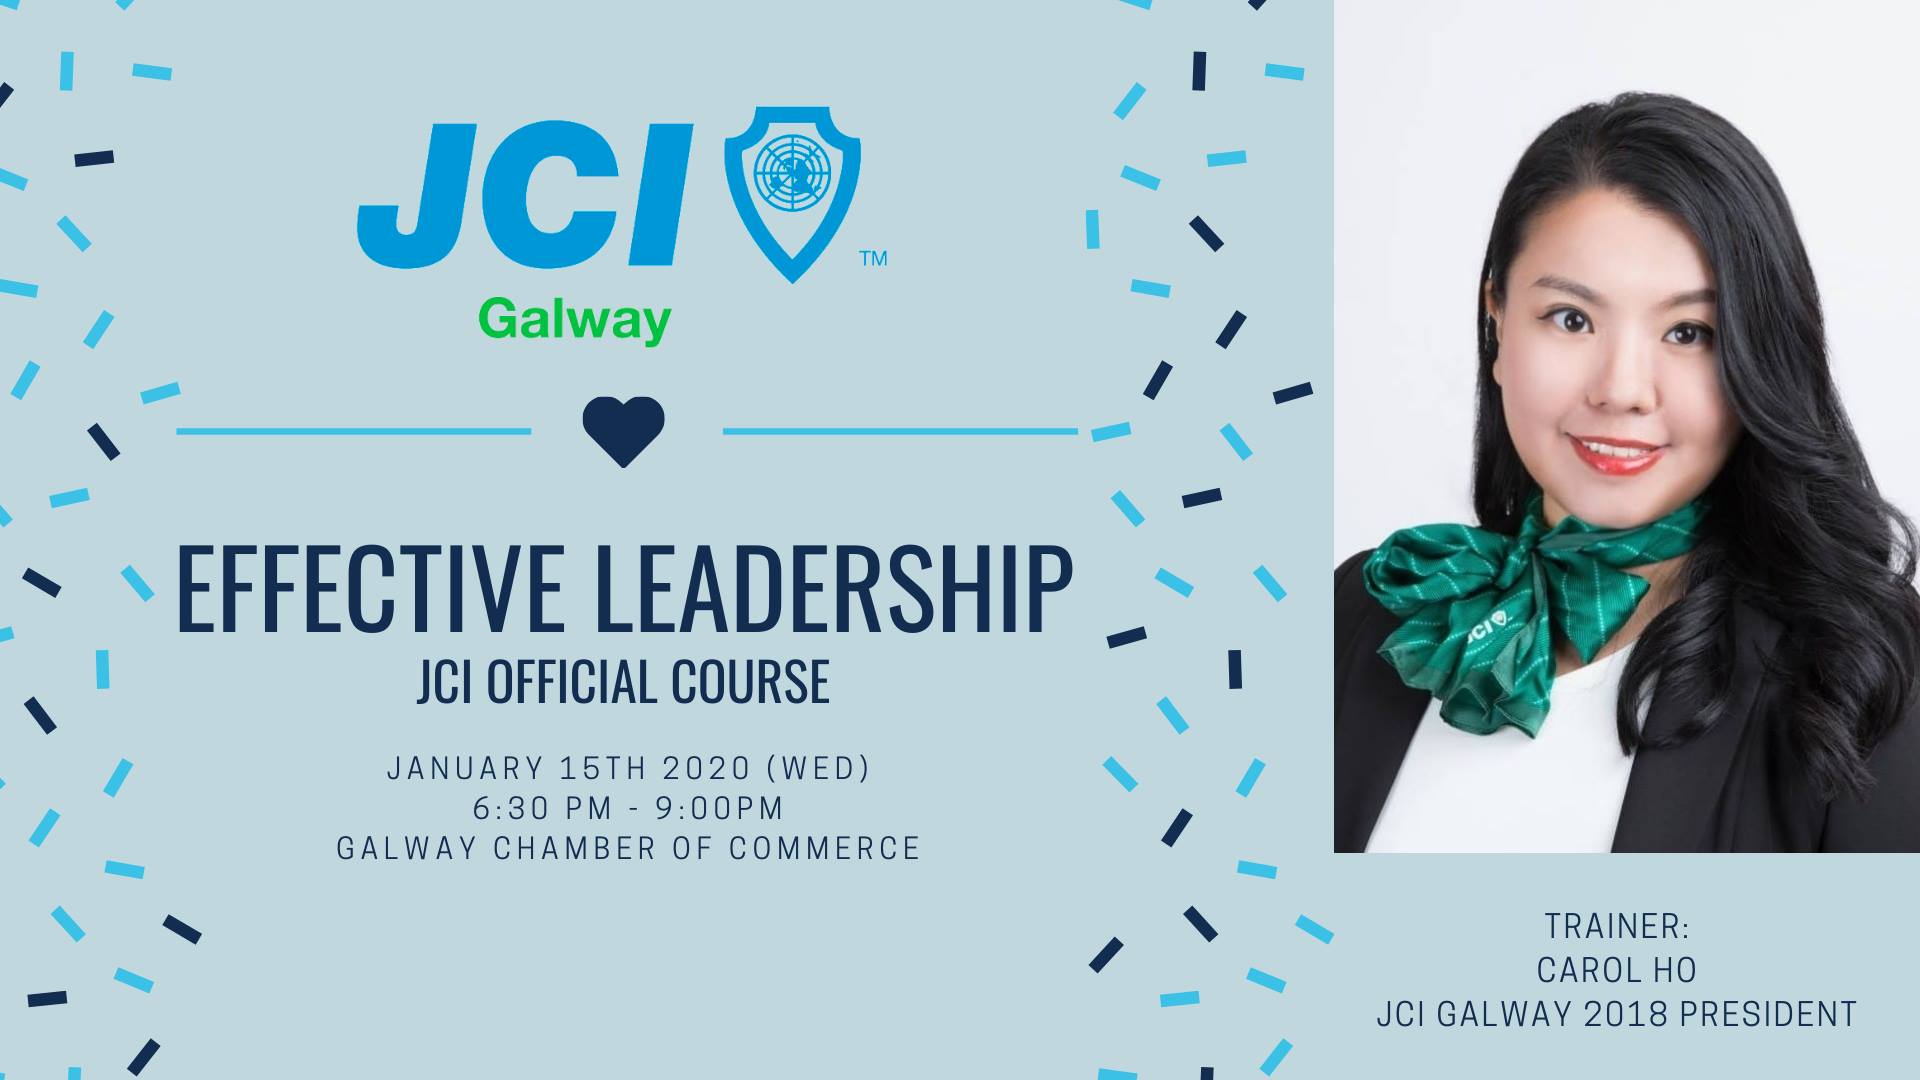 JCI Official Course - Effective Leadership